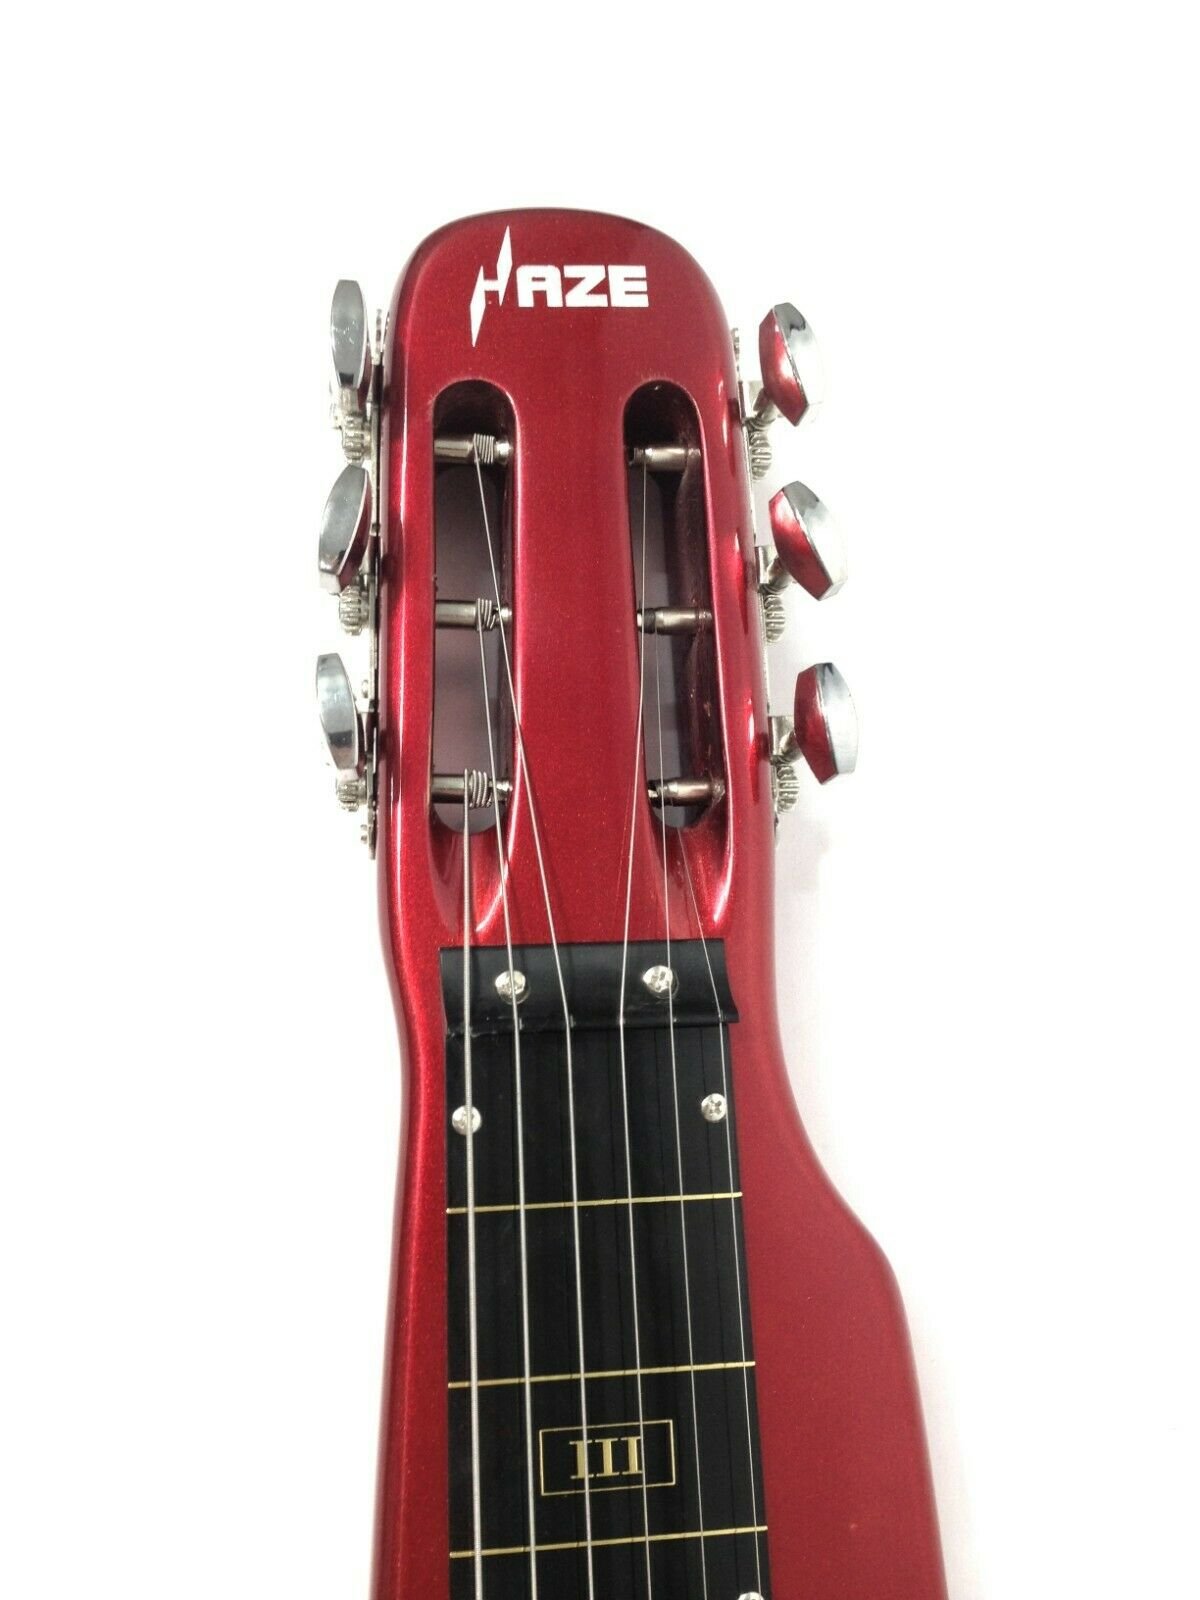 Haze Lap Steel Single Coil Height Adjustable Lap Steel Electric Guitar - Red HSLT1930MRD